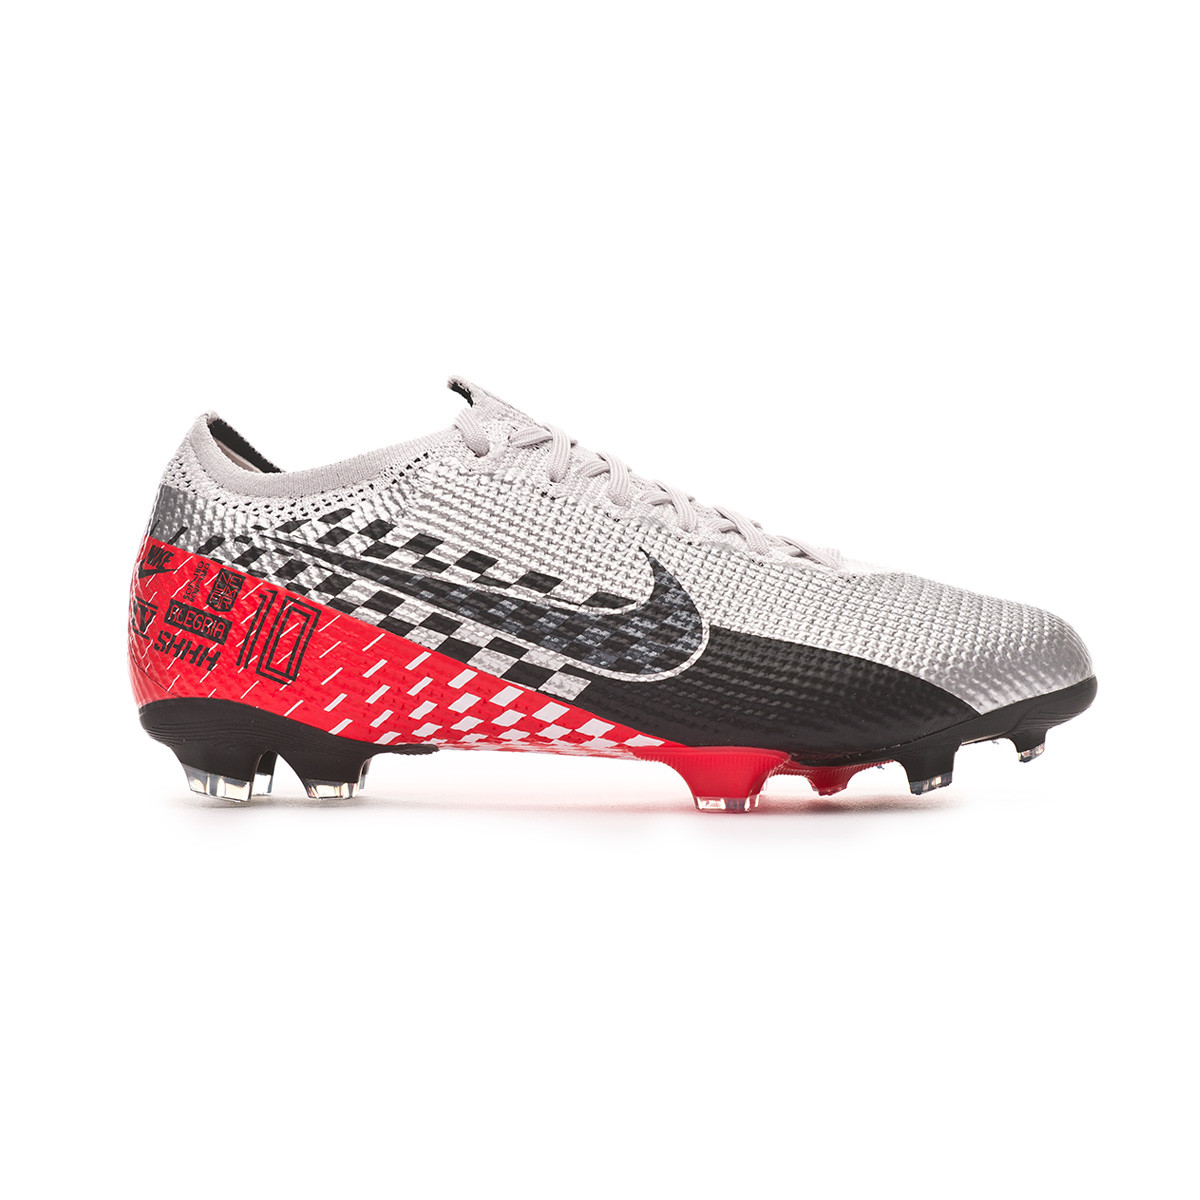 Zapatos de fútbol Nike Mercurial Vapor XIII Elite FG Neymar Jr Niño  Chrome-Black-Red orbit-Platinum tint - Tienda de fútbol Fútbol Emotion